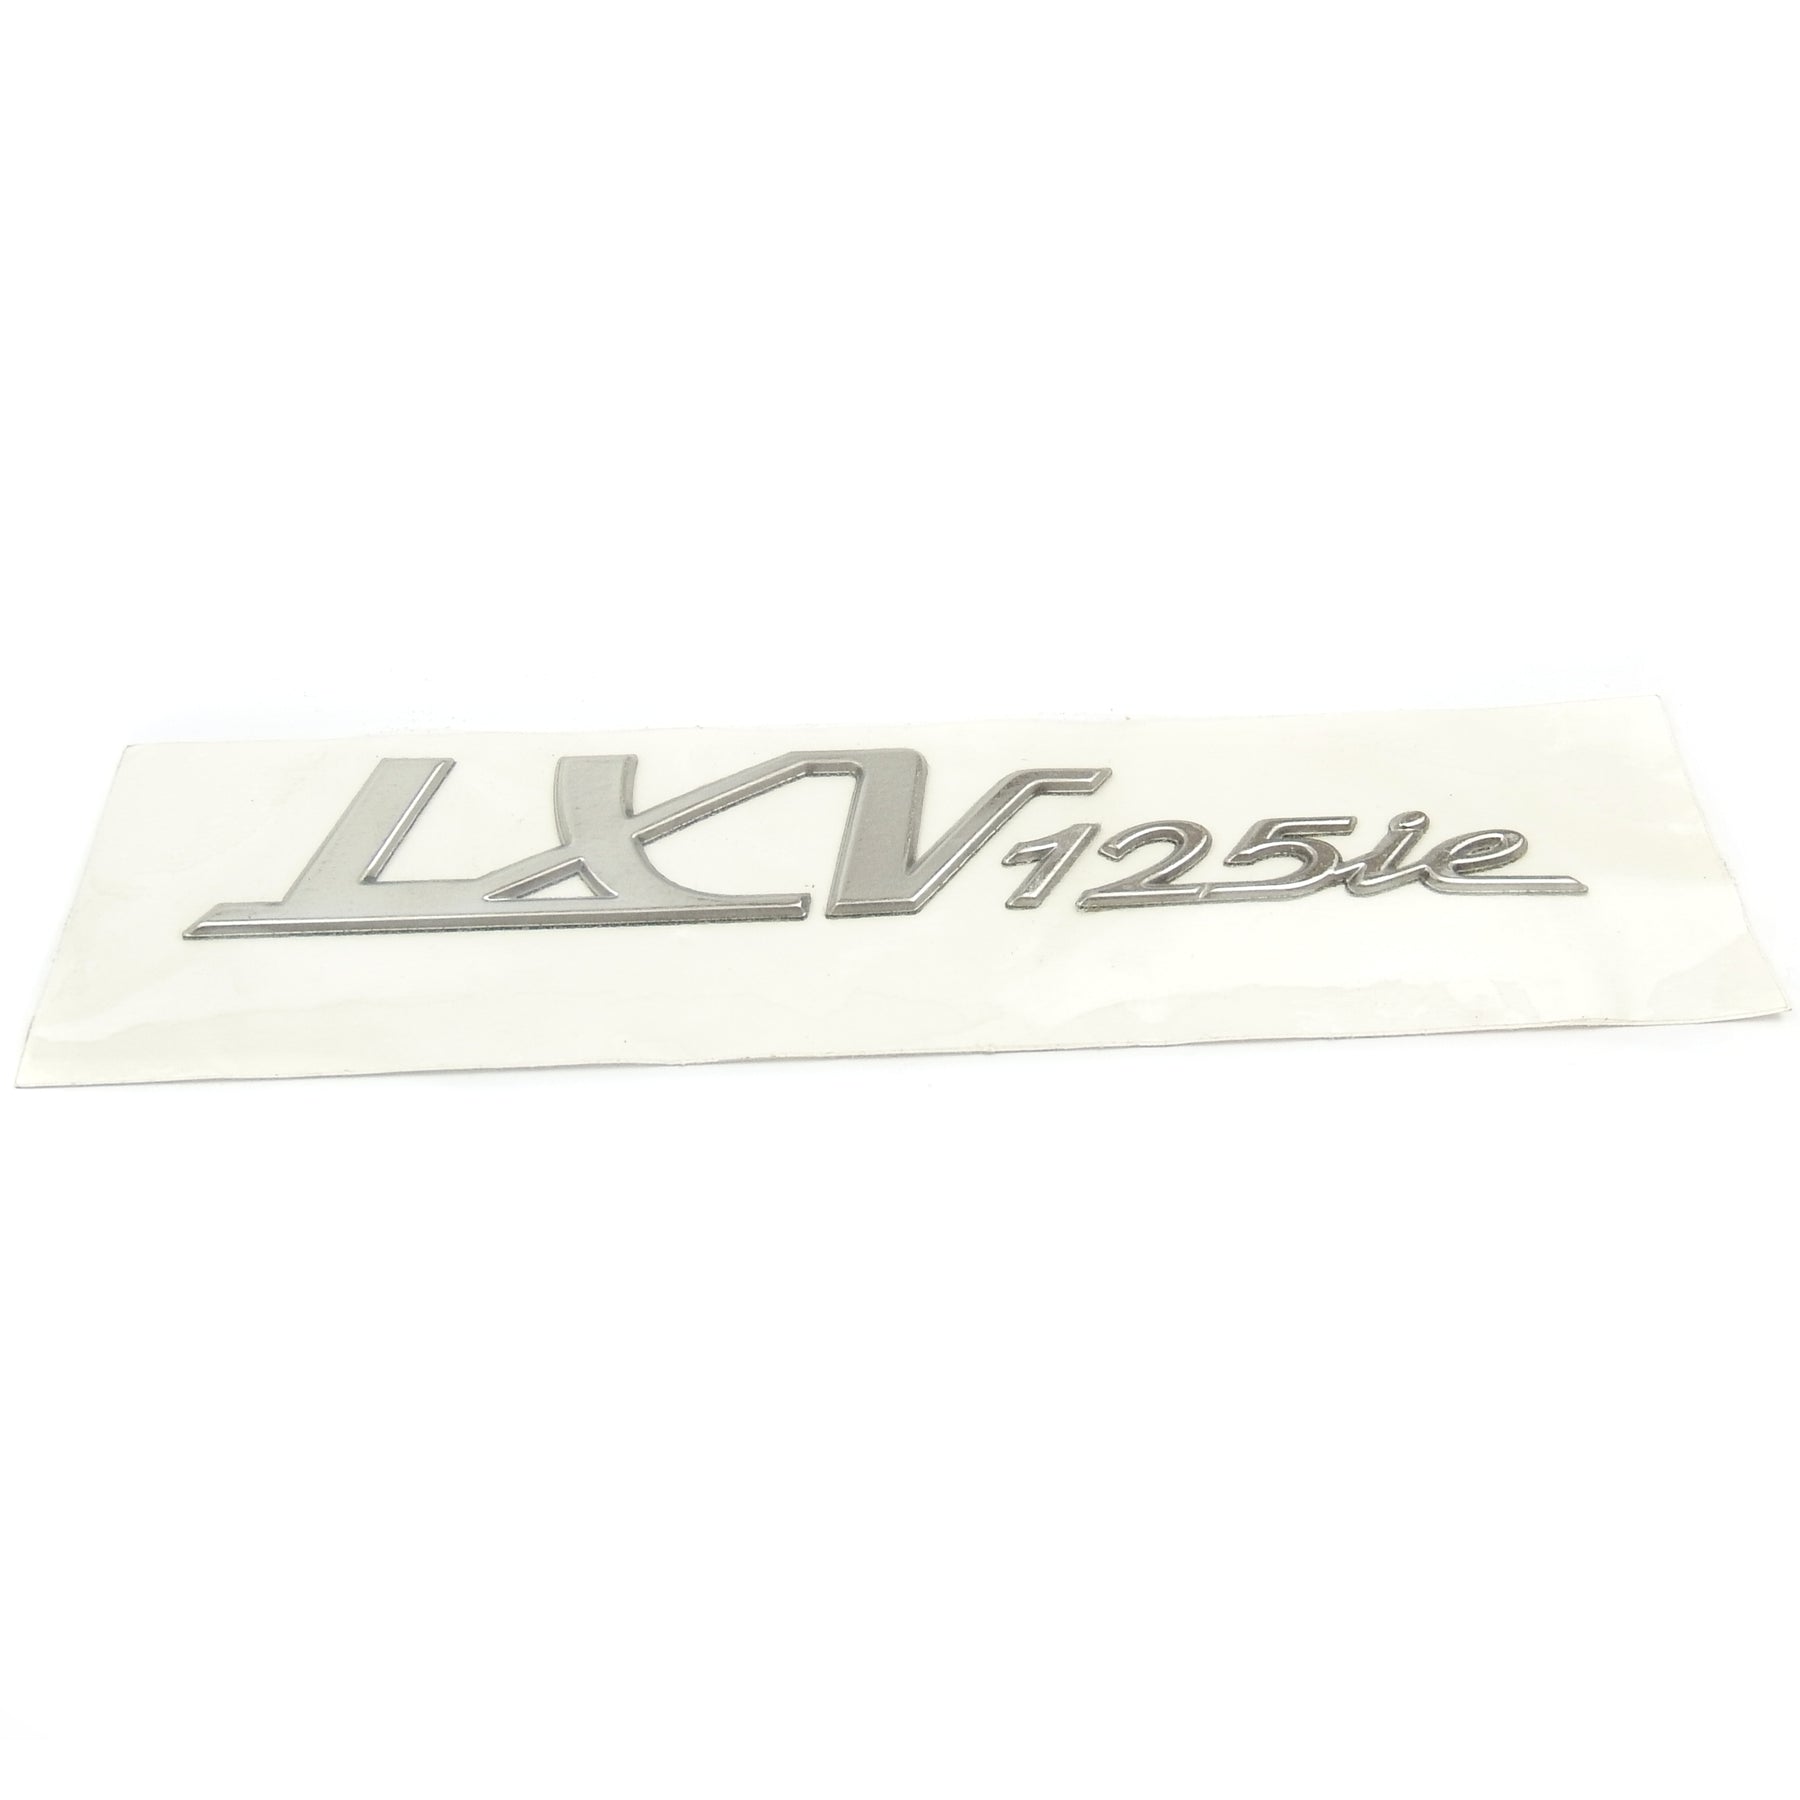 Stick On Vespa Badge 14.2cm x 2.2cm Silver LXV 125ie